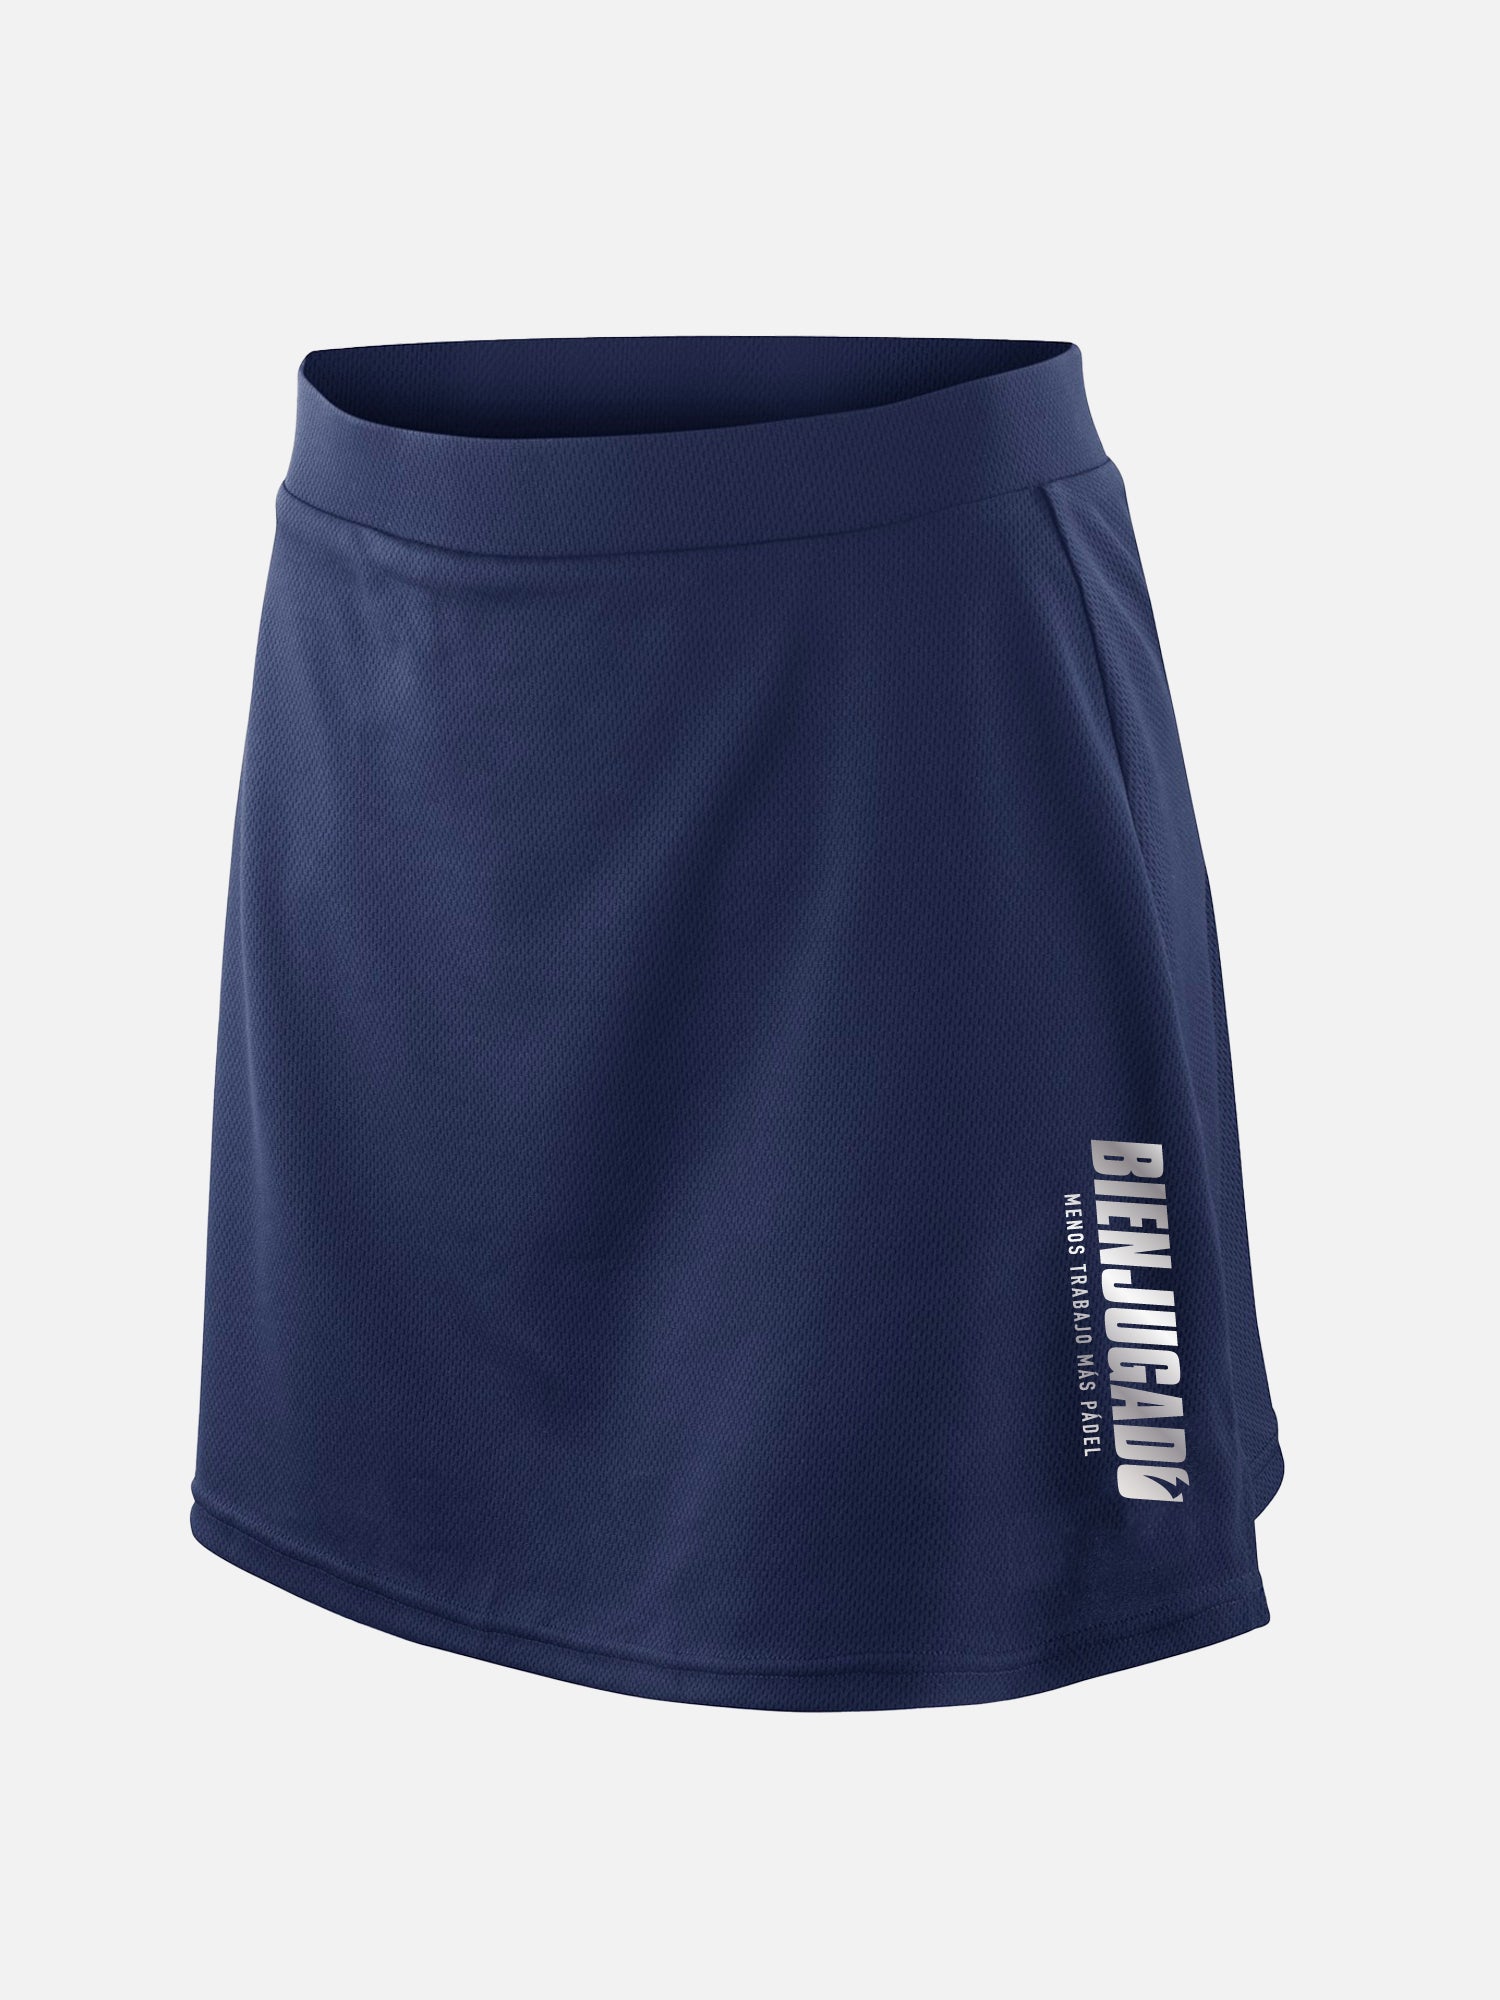 Dry Fit Skirt - Navy